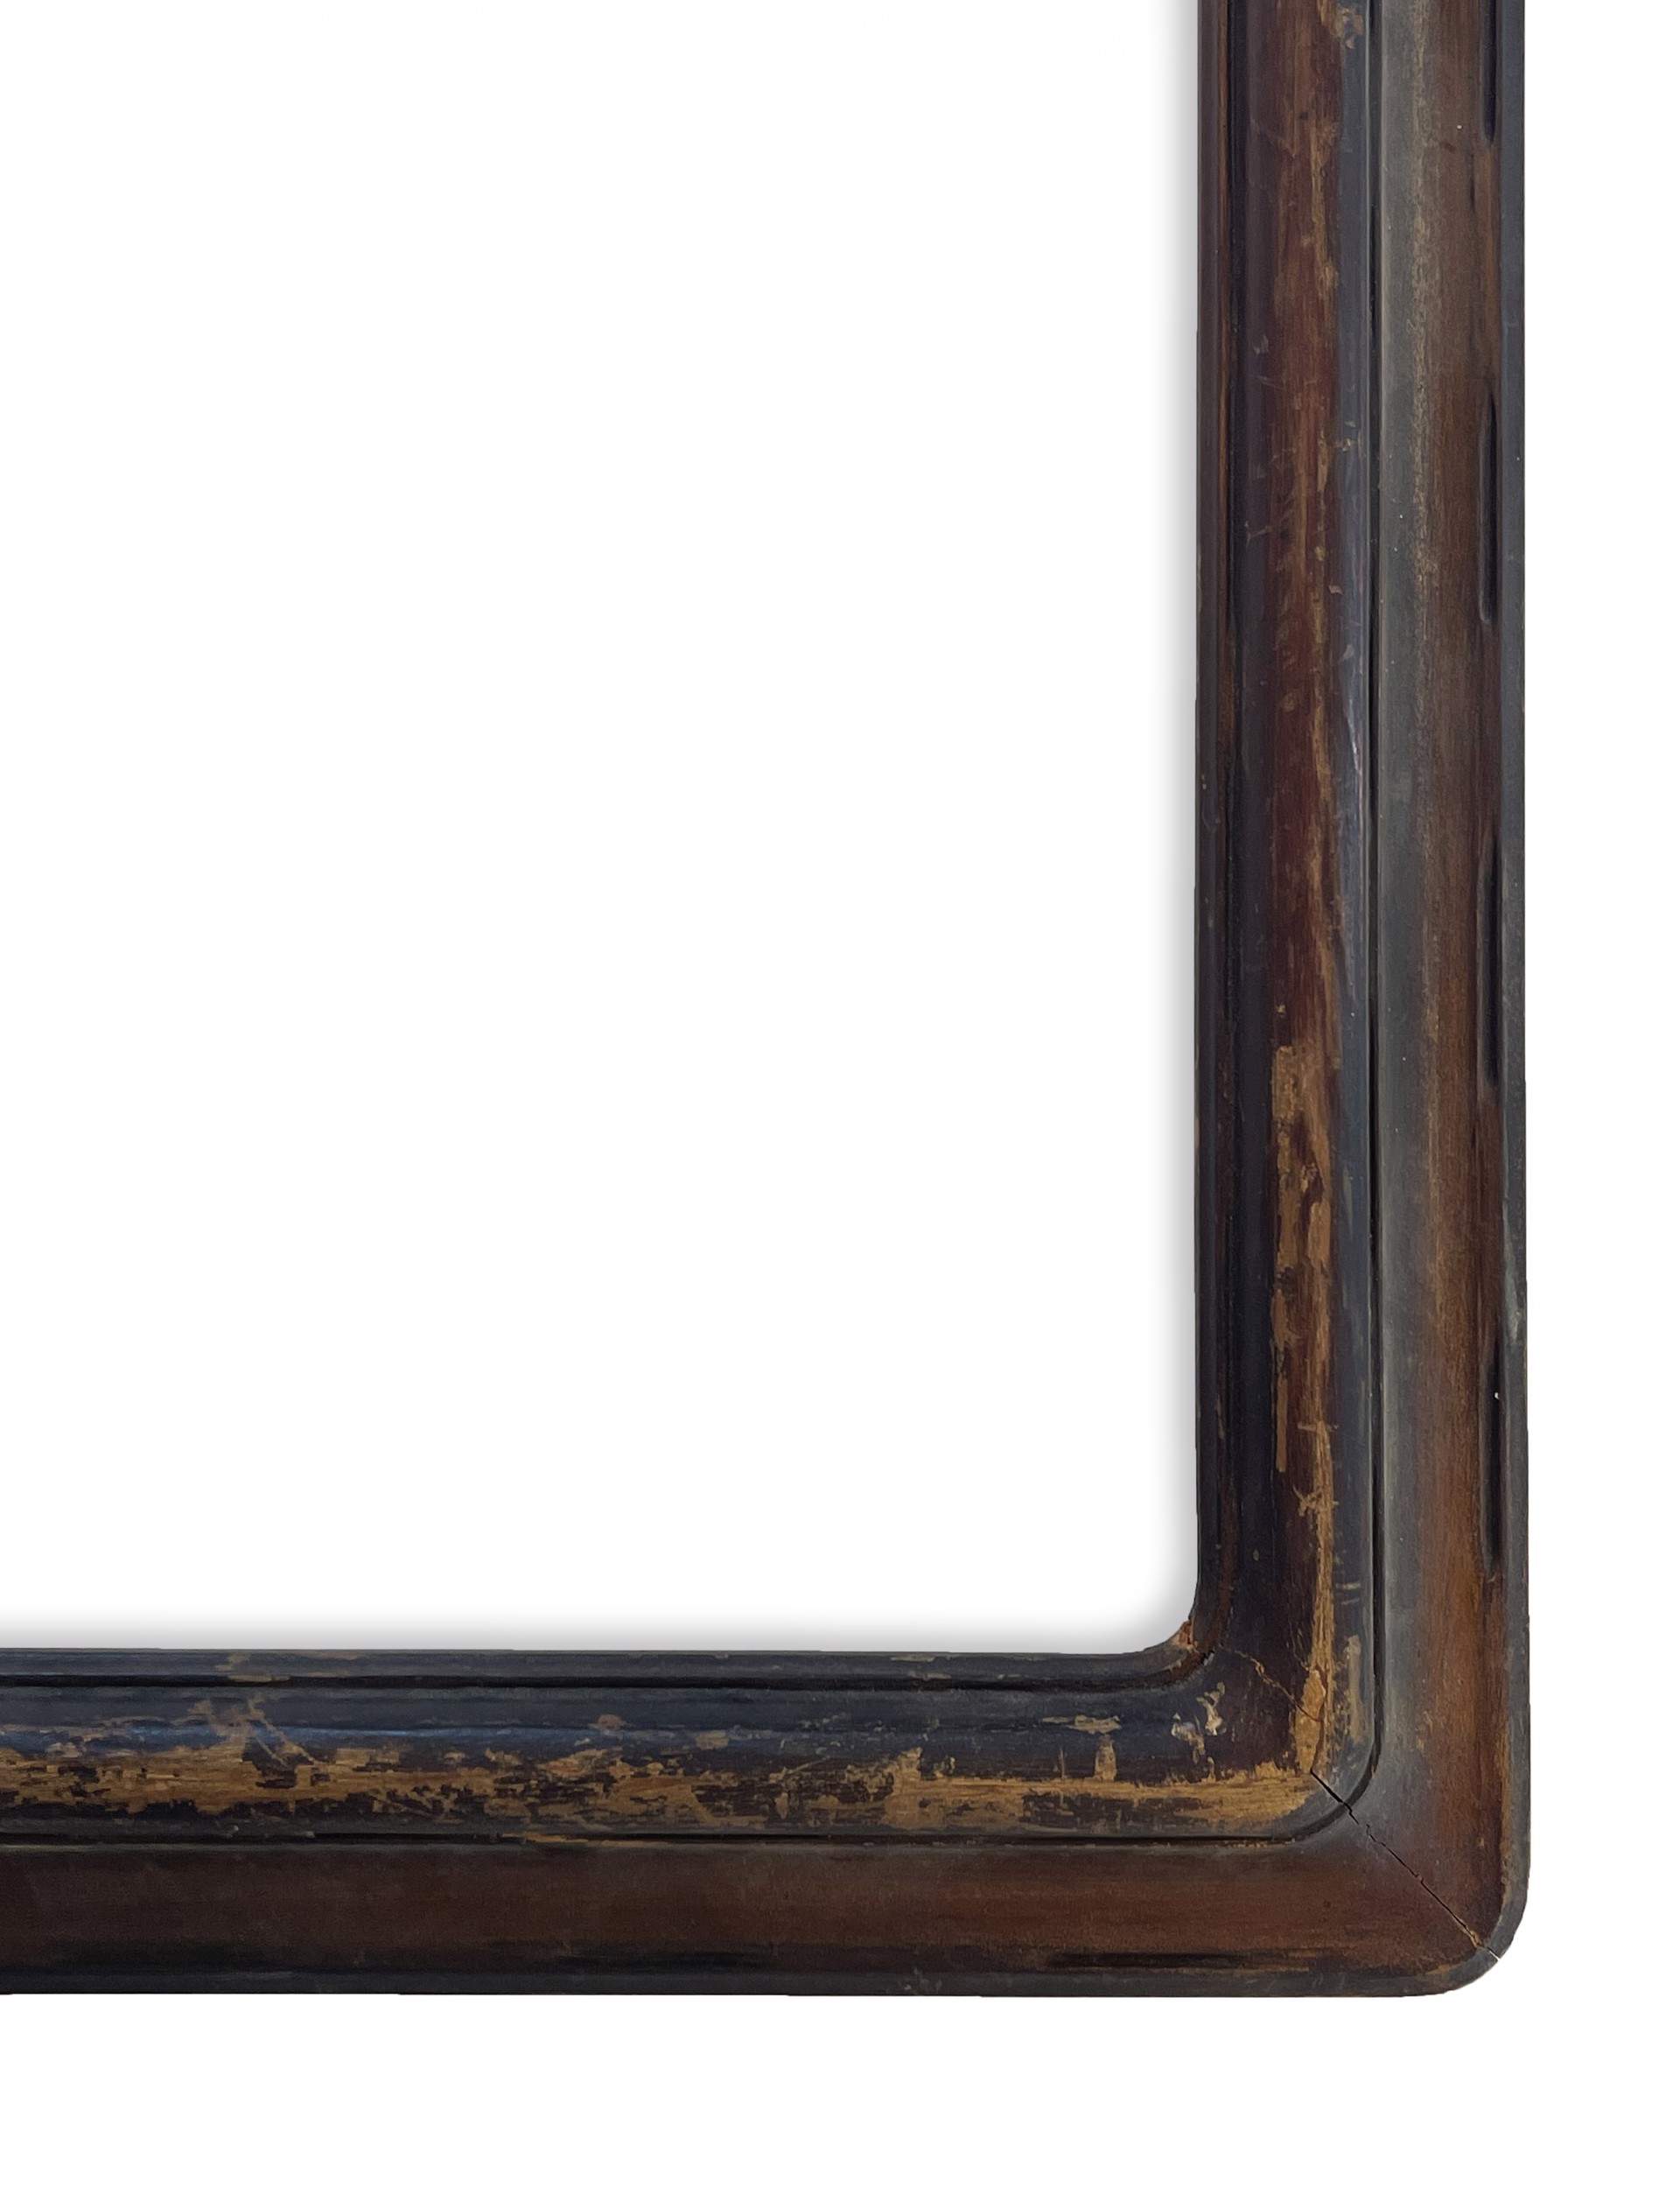 Antique, Hand-Carved, Rounded Corner Wood Frame by Antique Frame